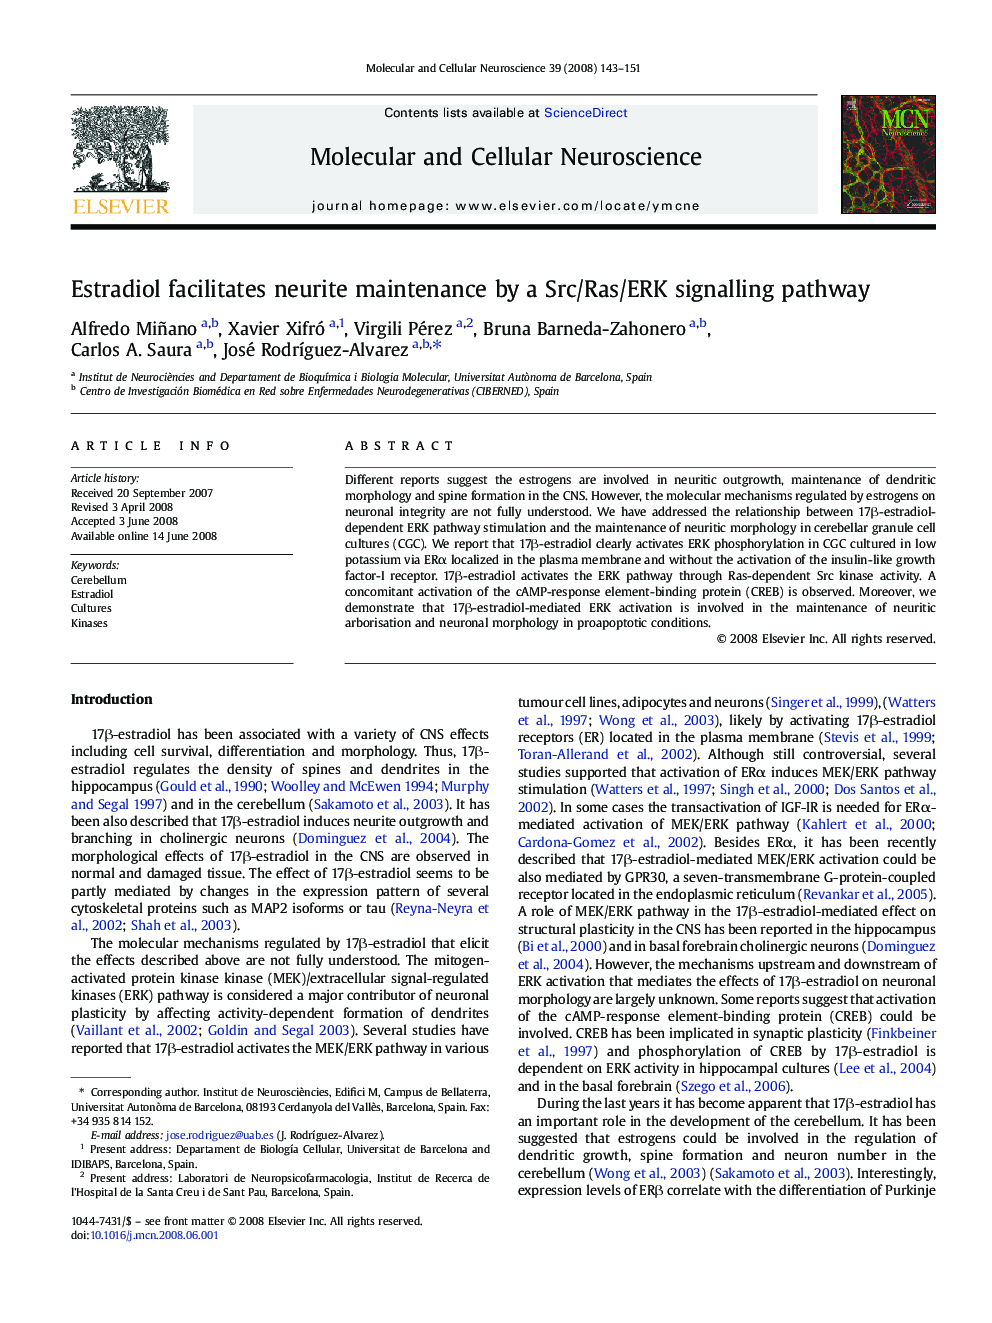 Estradiol facilitates neurite maintenance by a Src/Ras/ERK signalling pathway